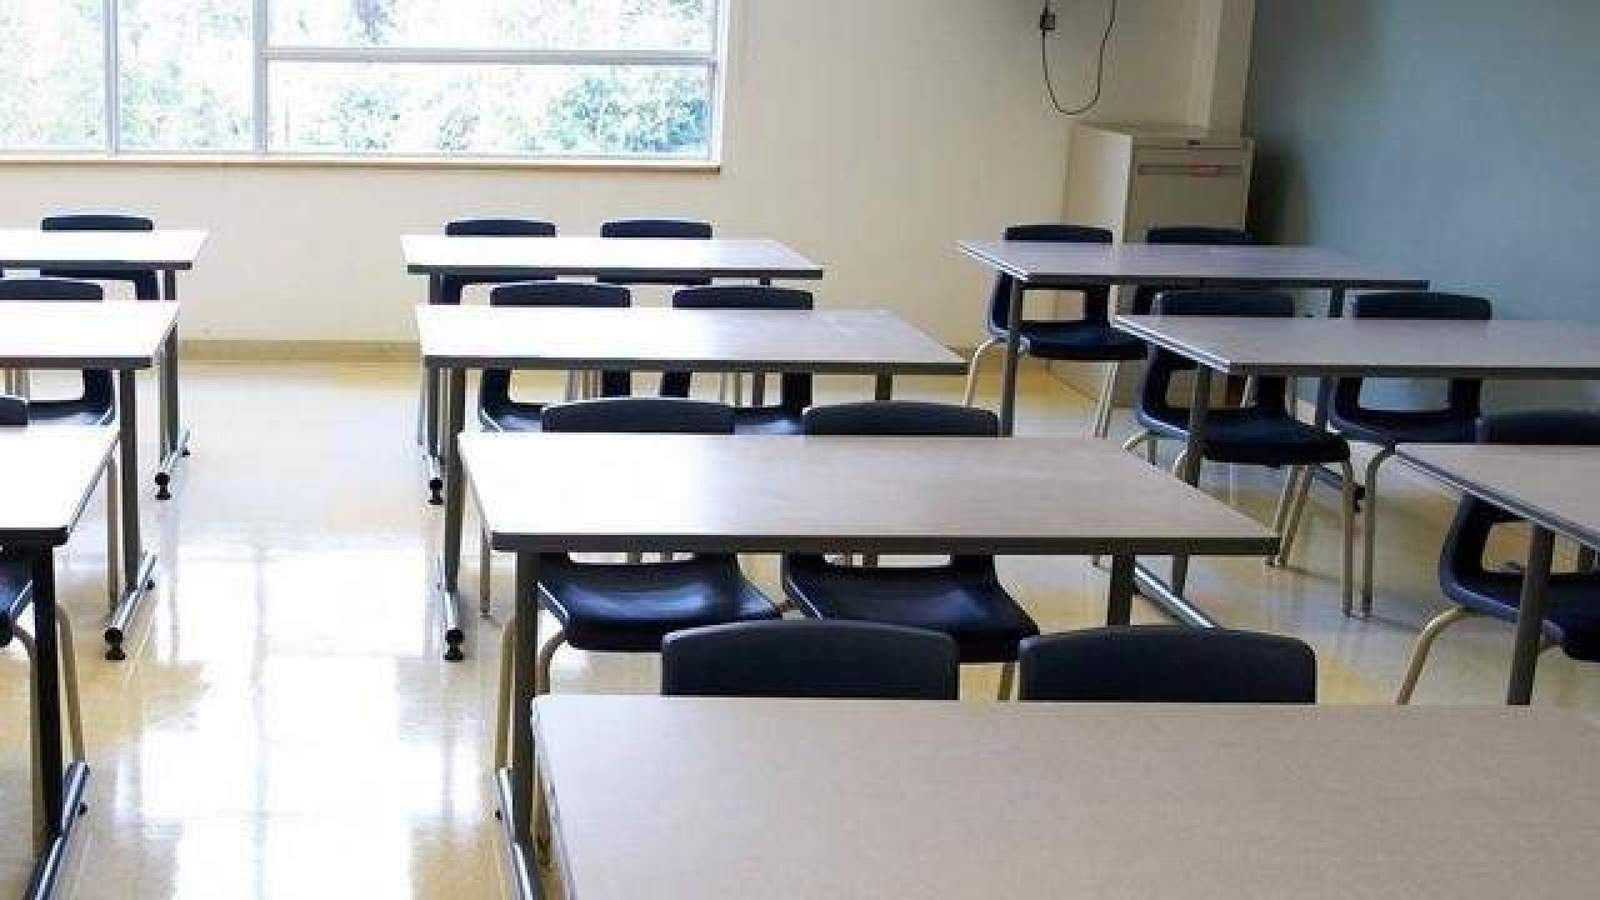 Cheating, fraud revealed in school audit; principal resigns, teacher fired, Livingston ISD says